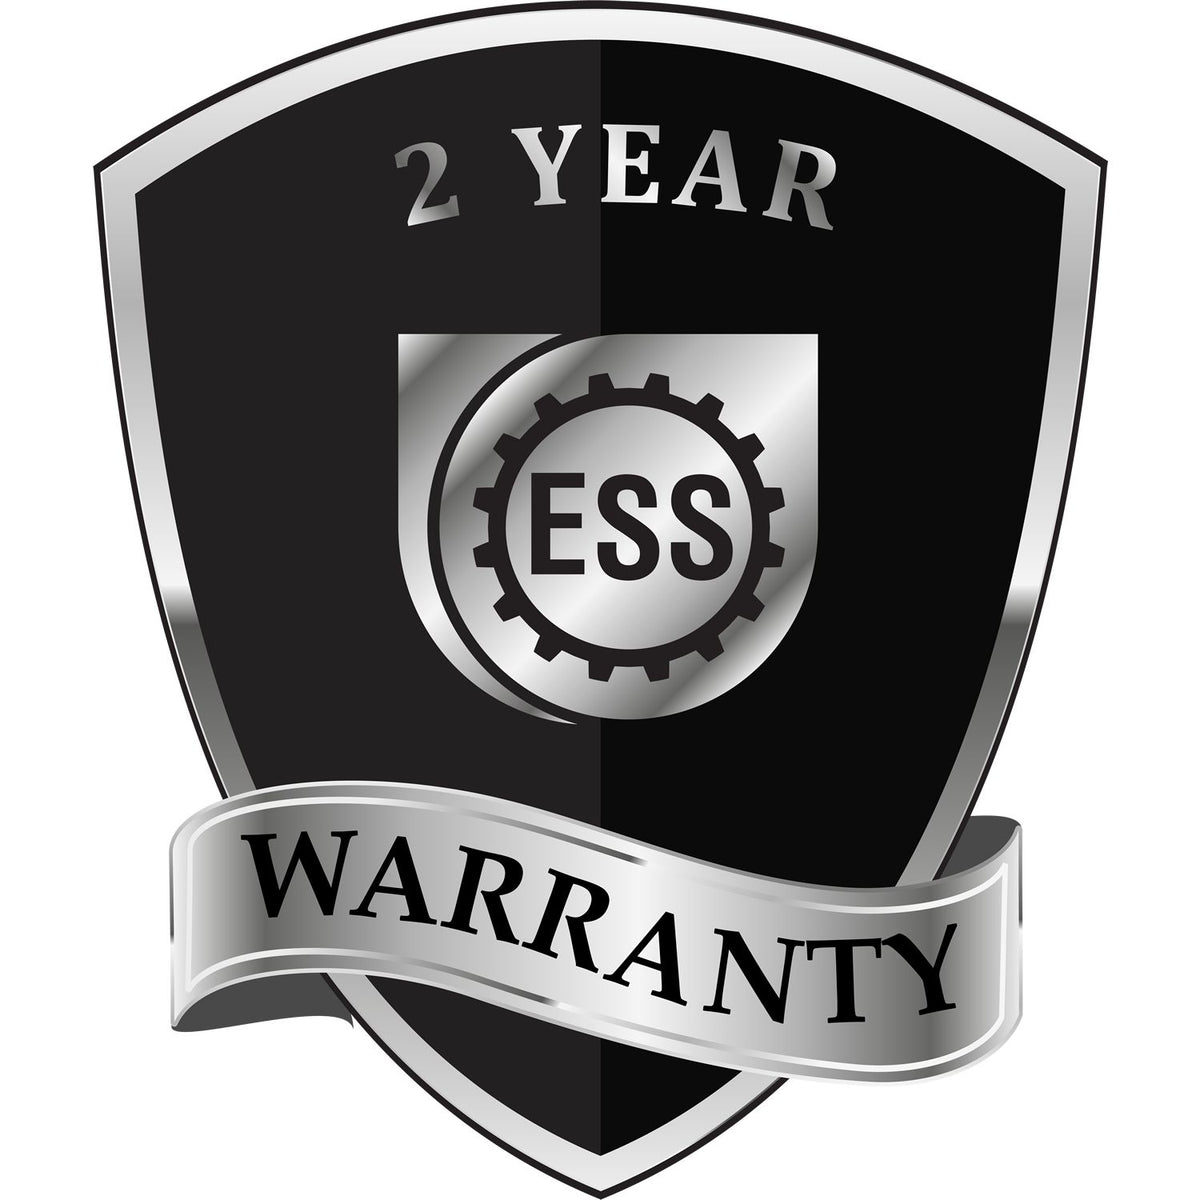 A badge or emblem showing a warranty icon for the Nebraska Engineer Desk Seal